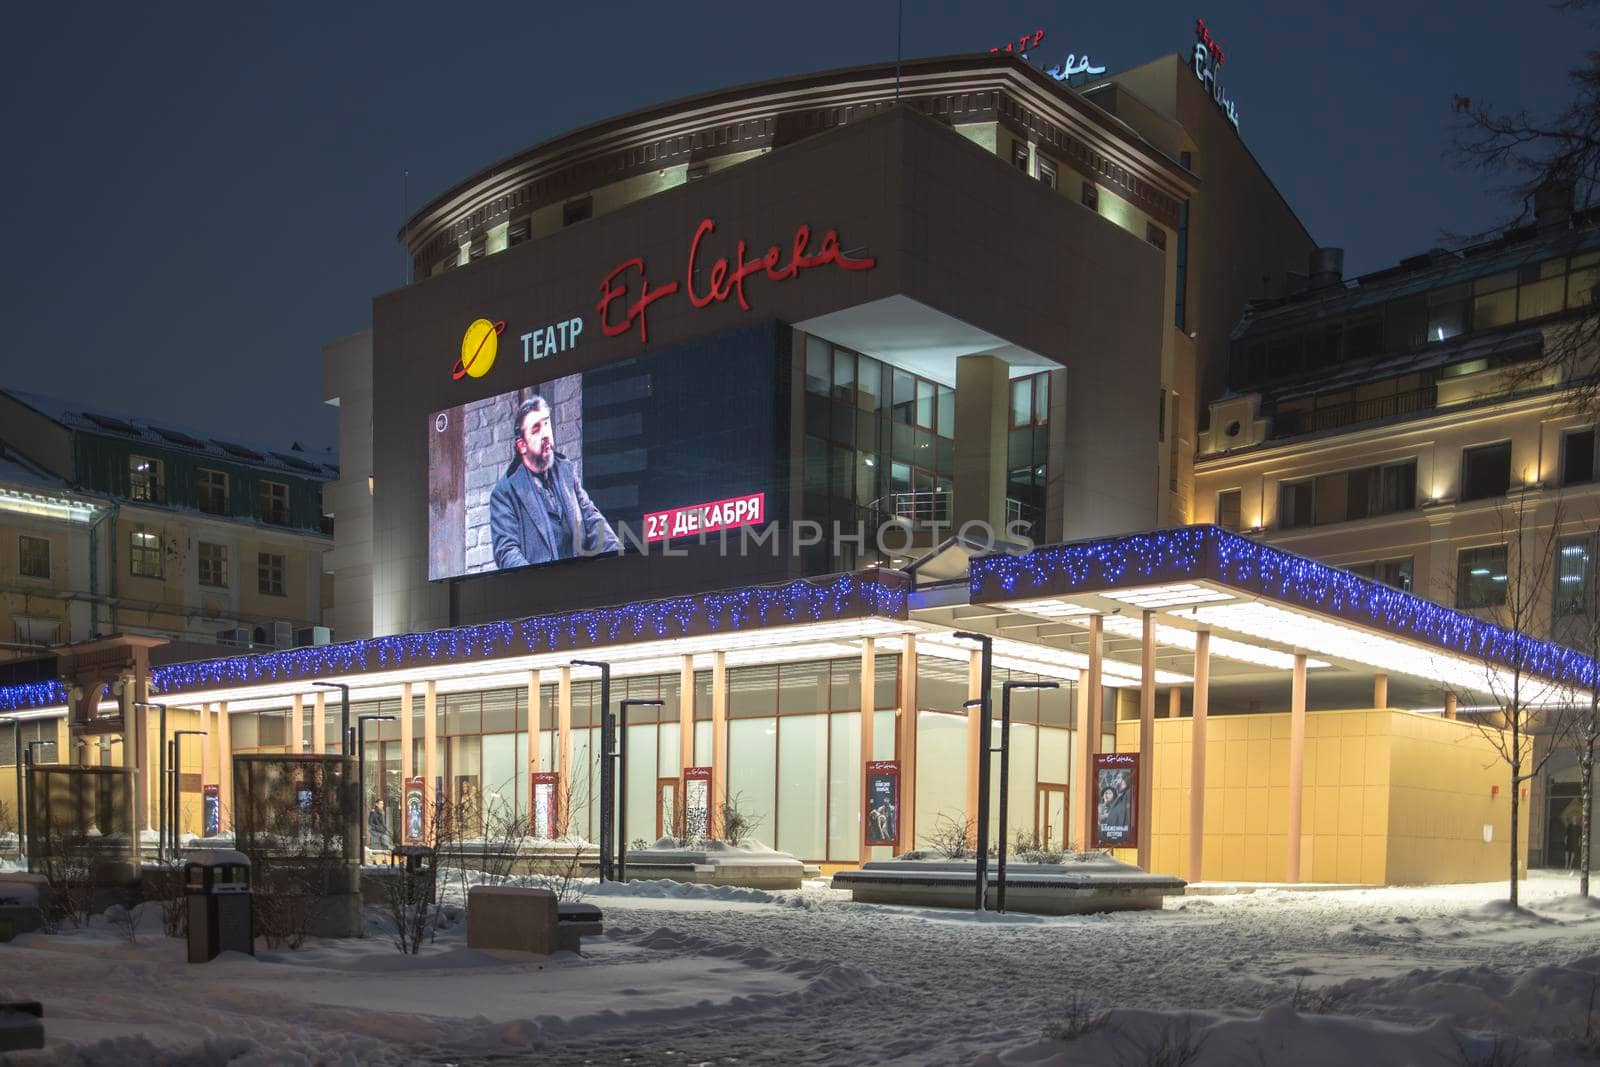 Moscow Theater "Et Cetera" at night by elenarostunova